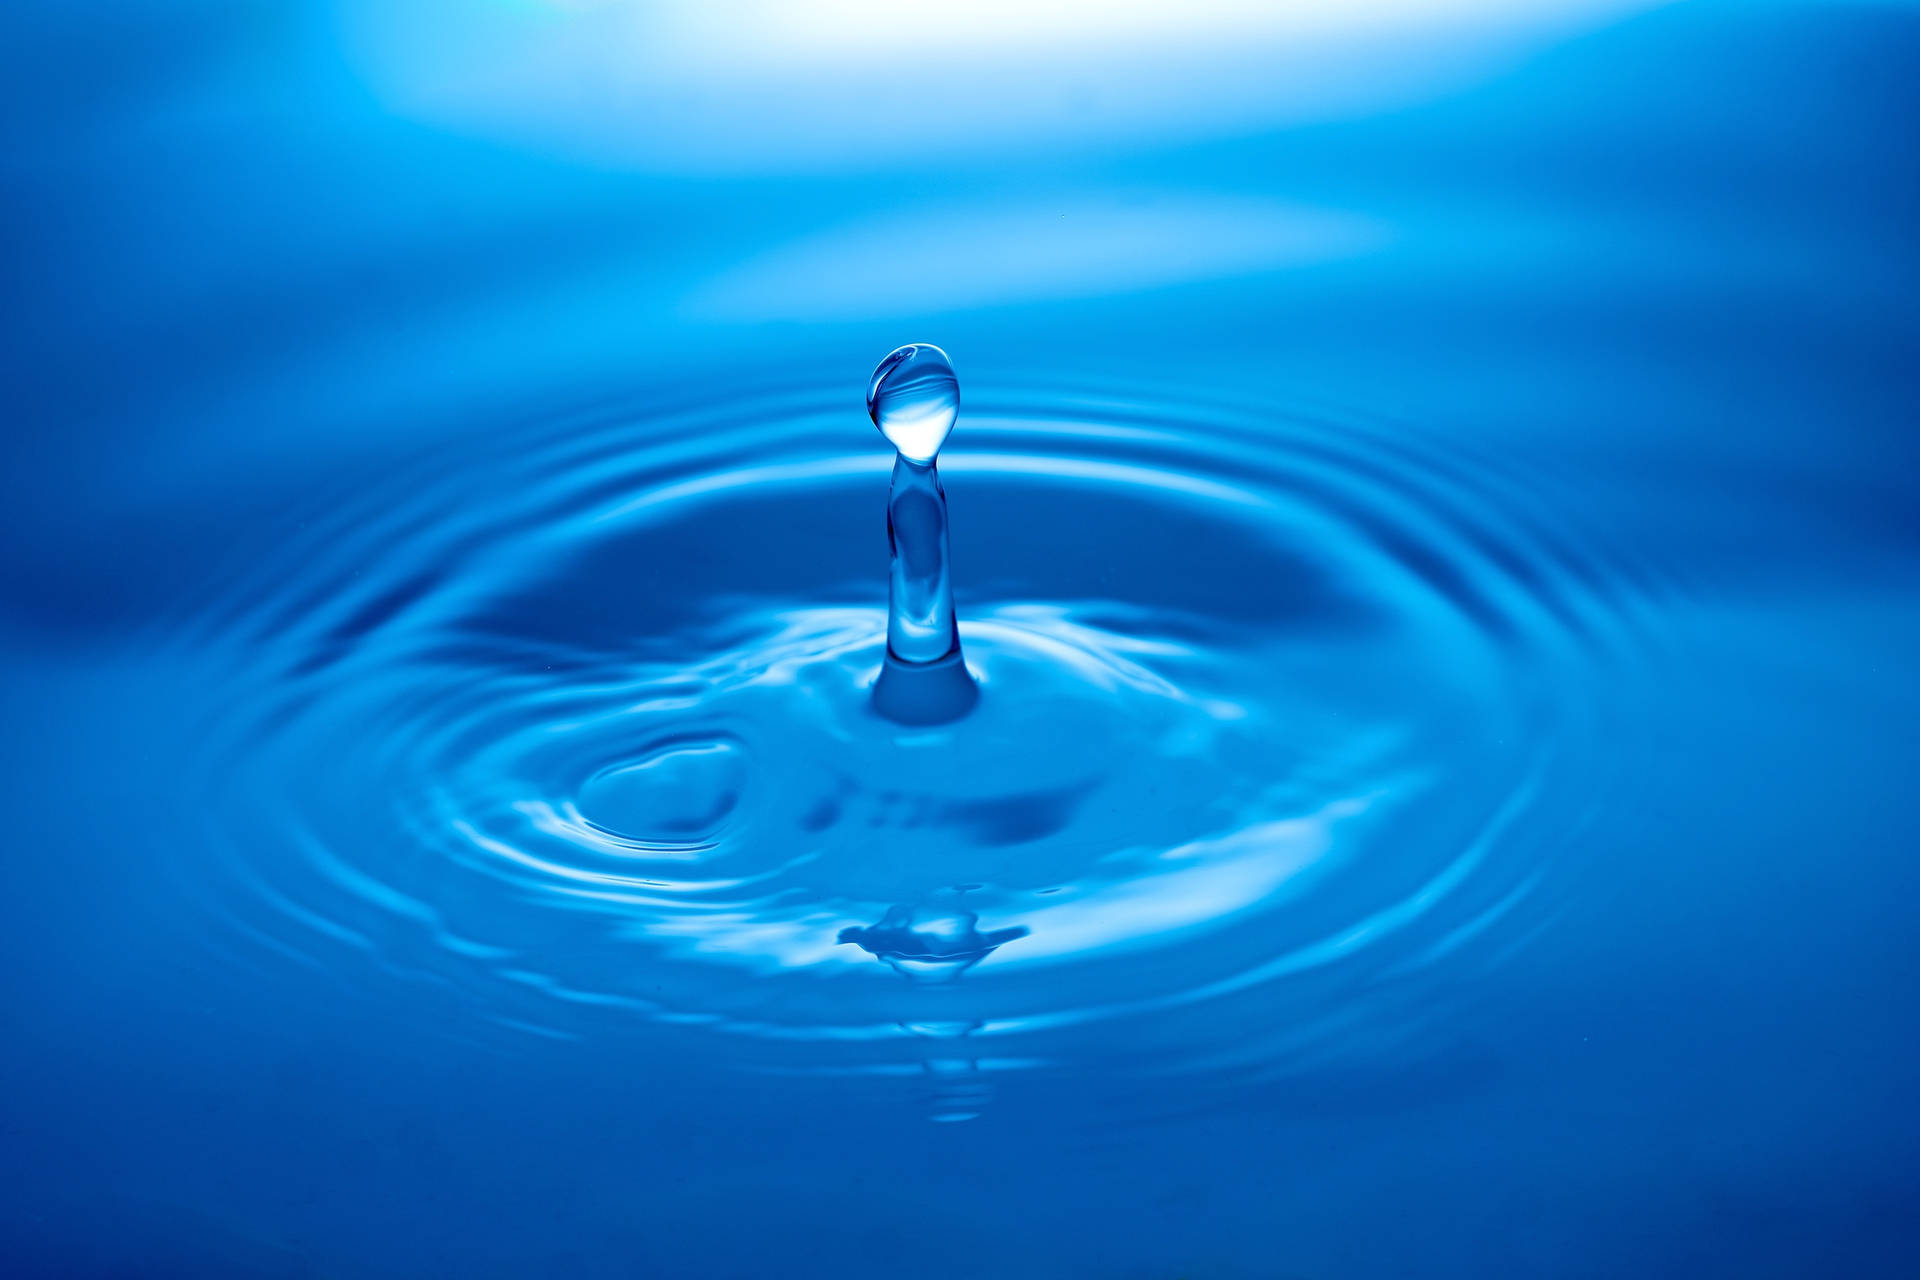 Estetisktblått Vattendroppsmönster (assuming The Intended Meaning Is A Wallpaper Pattern Featuring Blue Water Droplets) Wallpaper